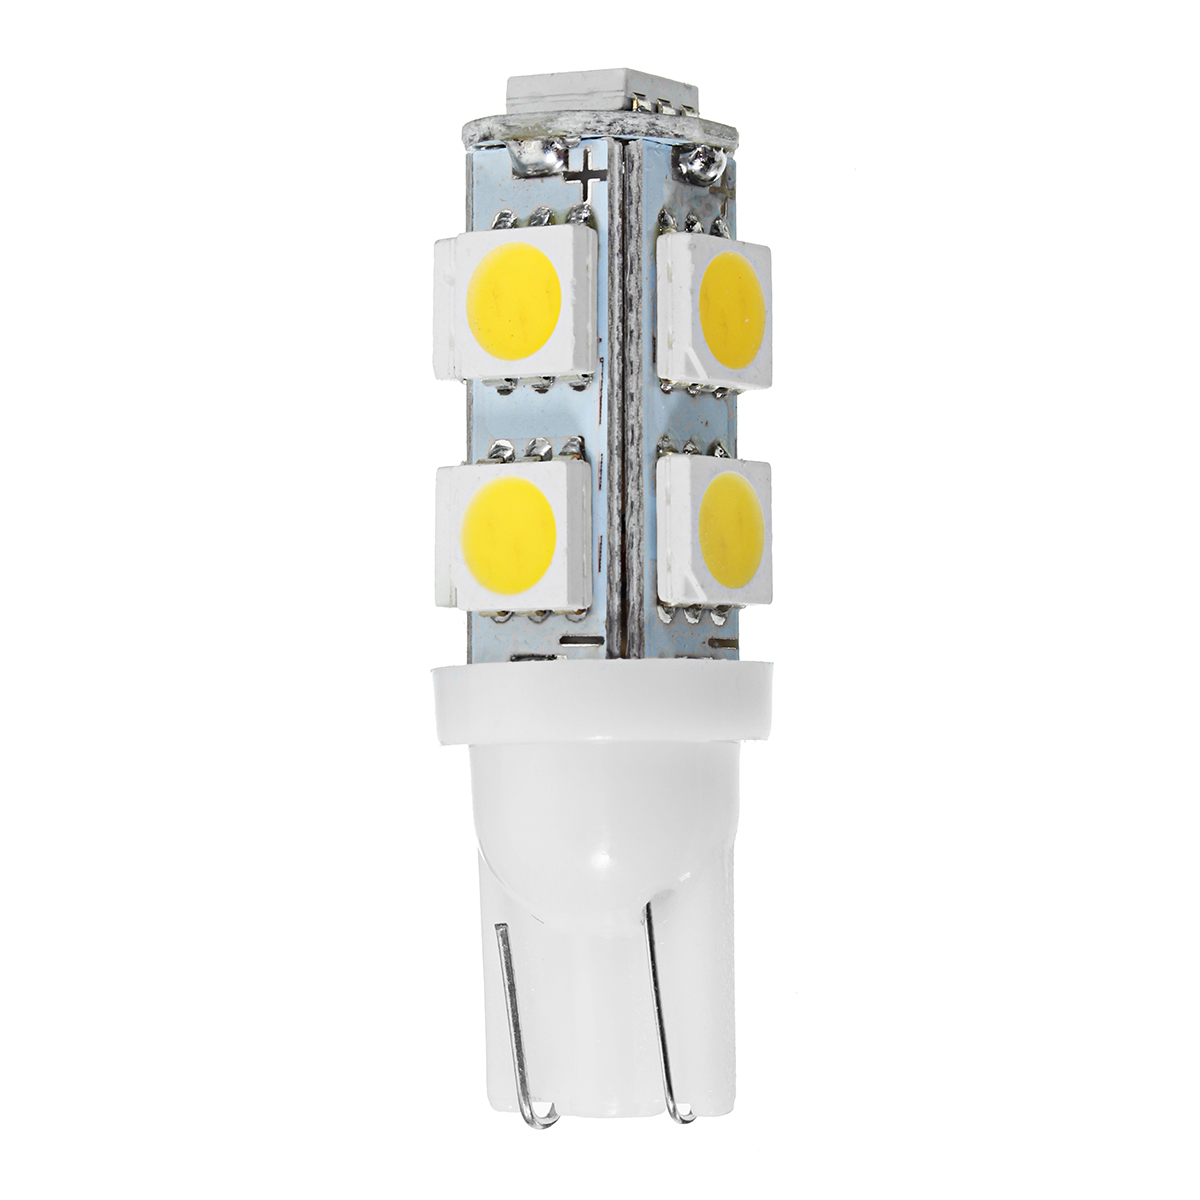 T10 W5W 168 12V 120LM 9LED Car Truck Light Bulb Side Indicator License Plate Lamp Bulb